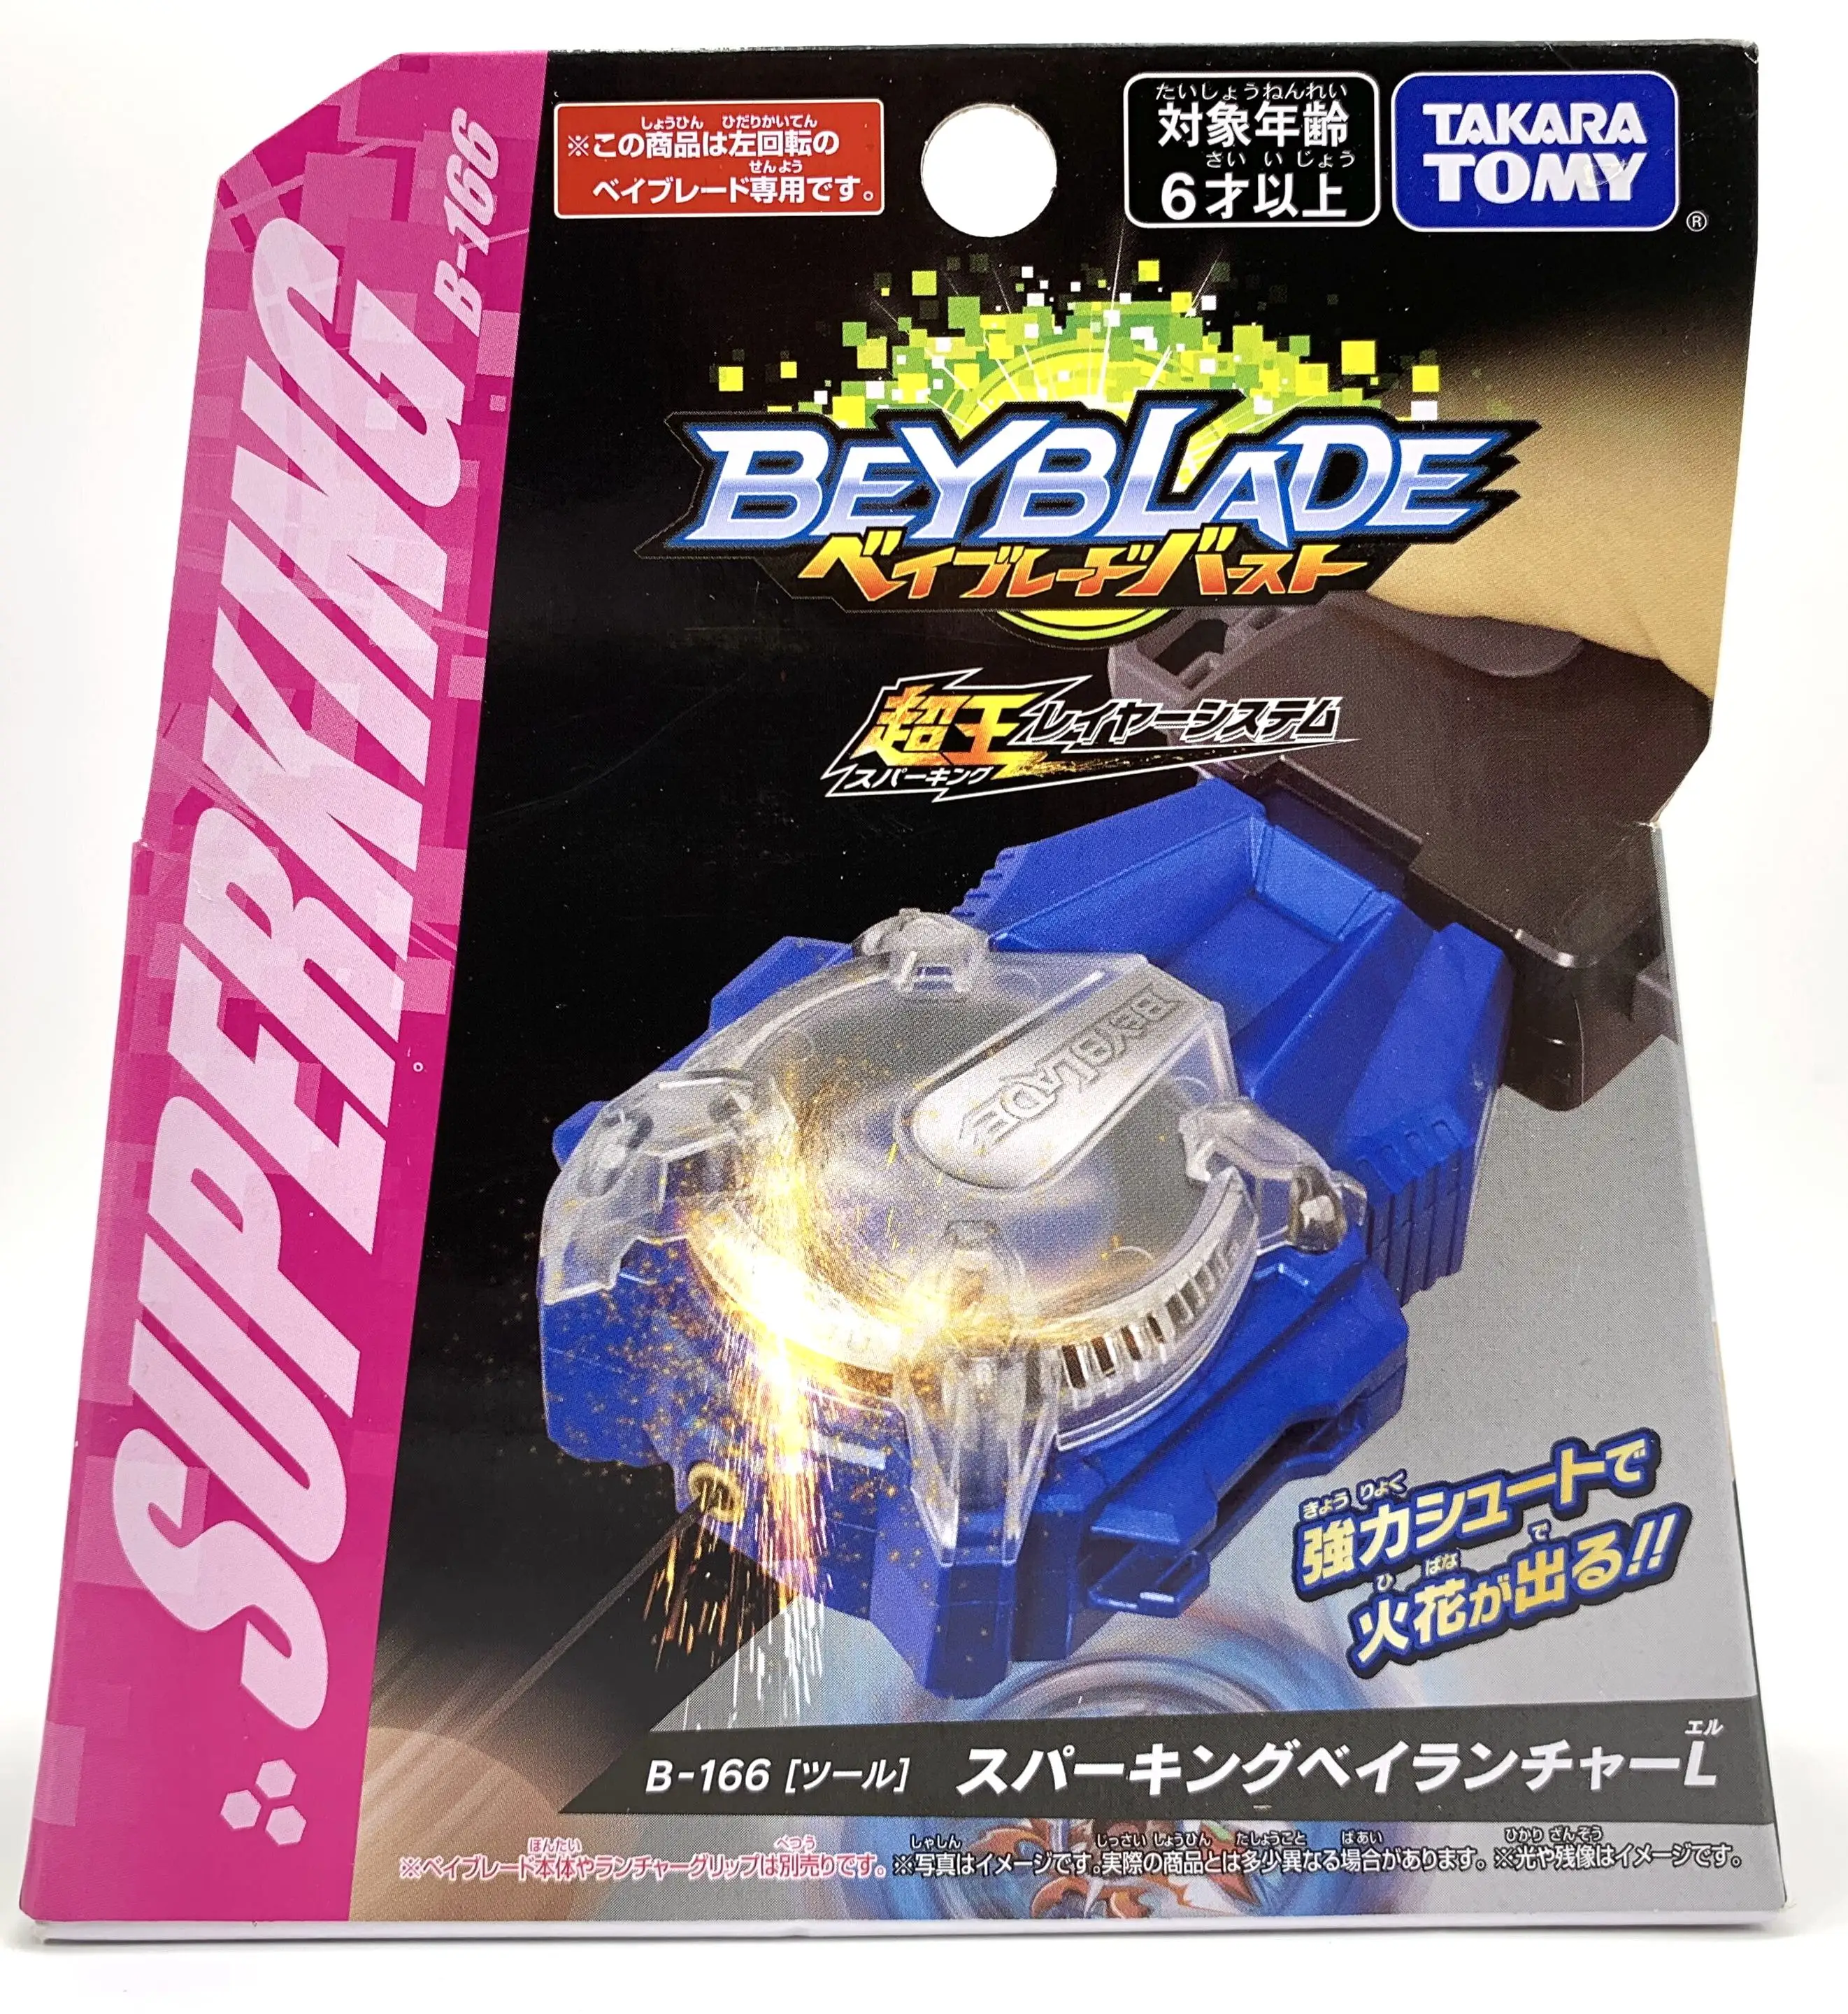 

Free Shipping Takara Tomy Bayblade Super King Gyroscope B-166 Blue Spark Beyblade Burst Launcher Toys For Children Boys